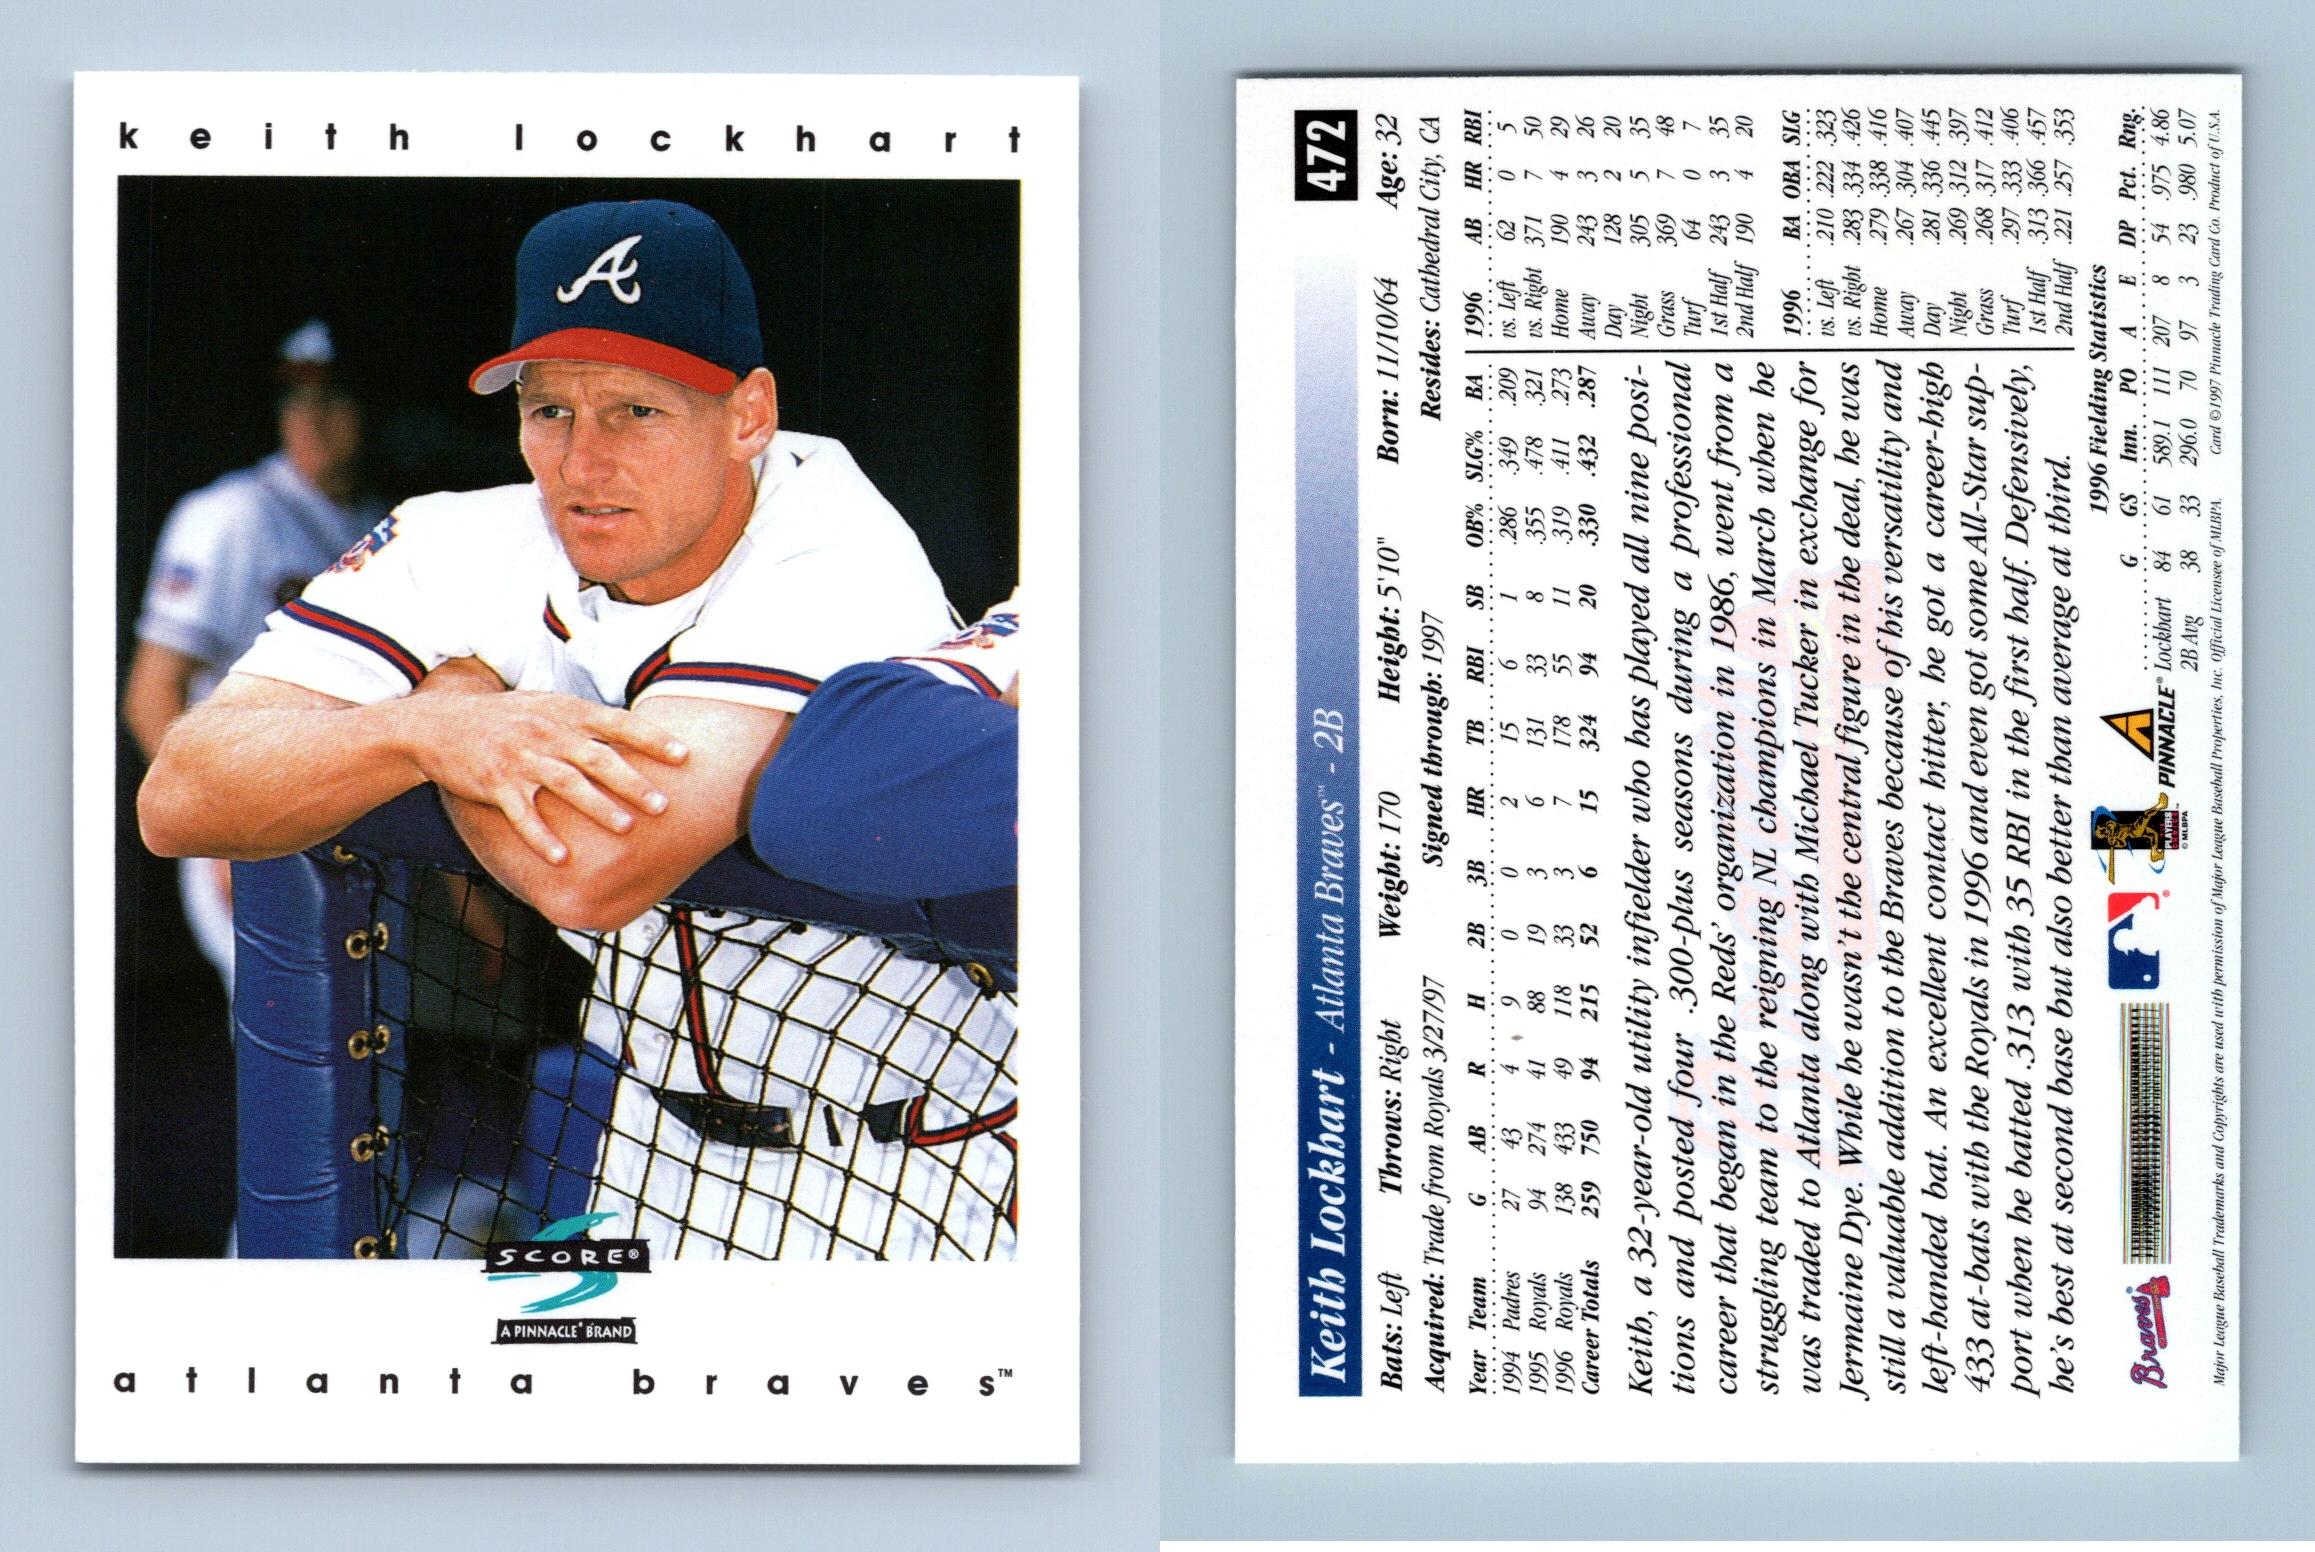 Ricky Bottalico - Phillies #61 Score 1997 Baseball Trading Card